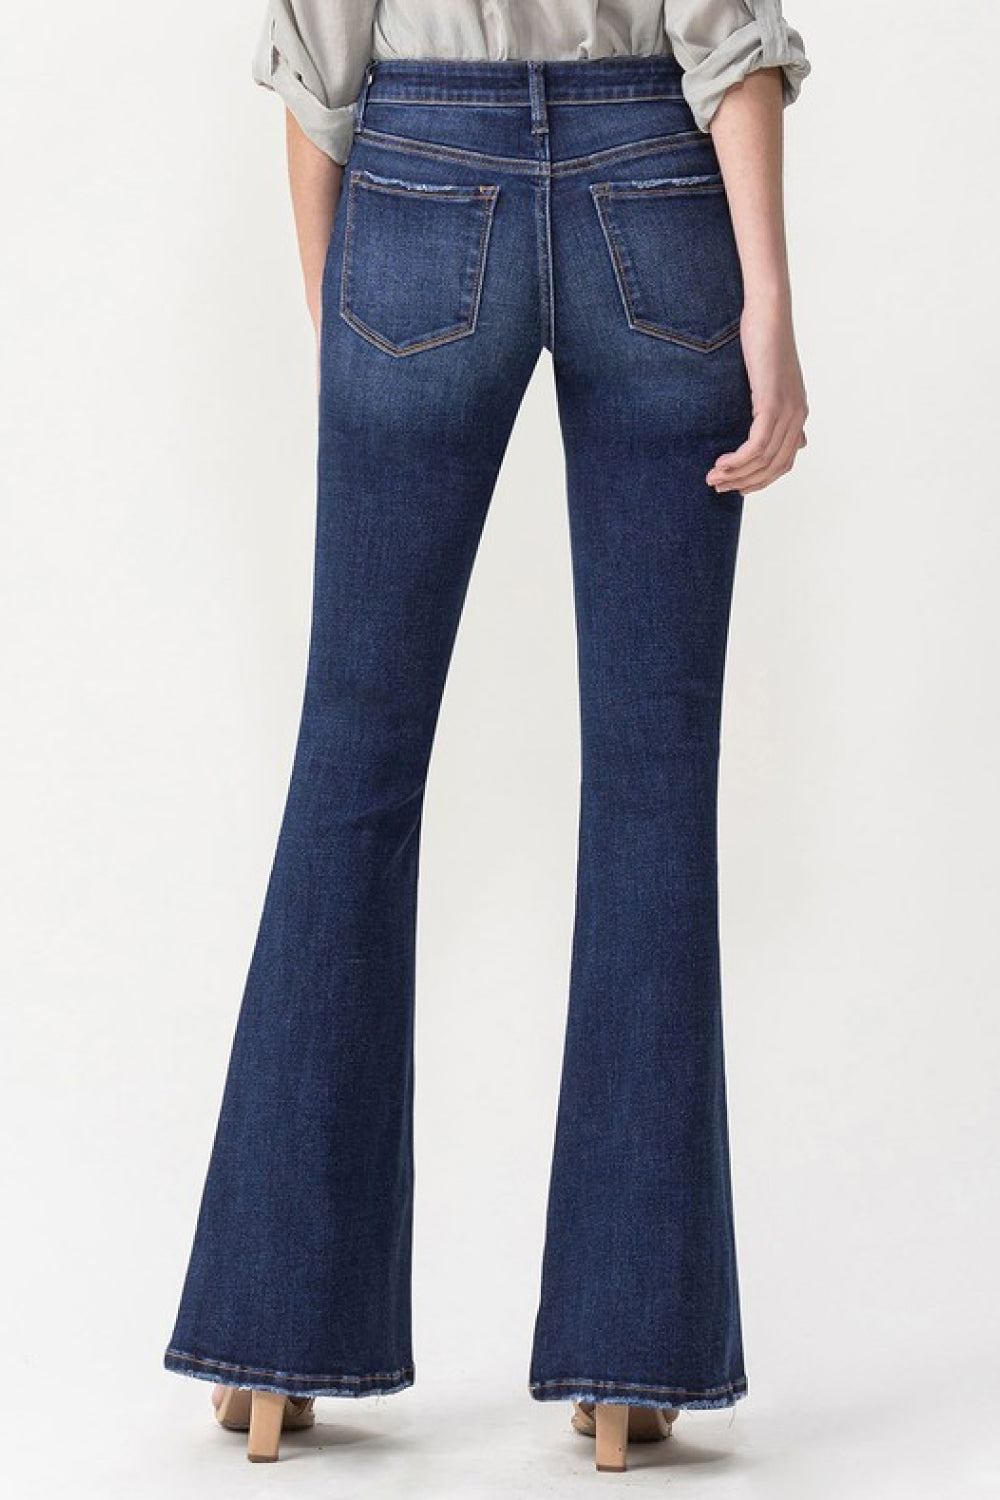 Lovervet Joanna Midrise Flare Jeans - Online Only